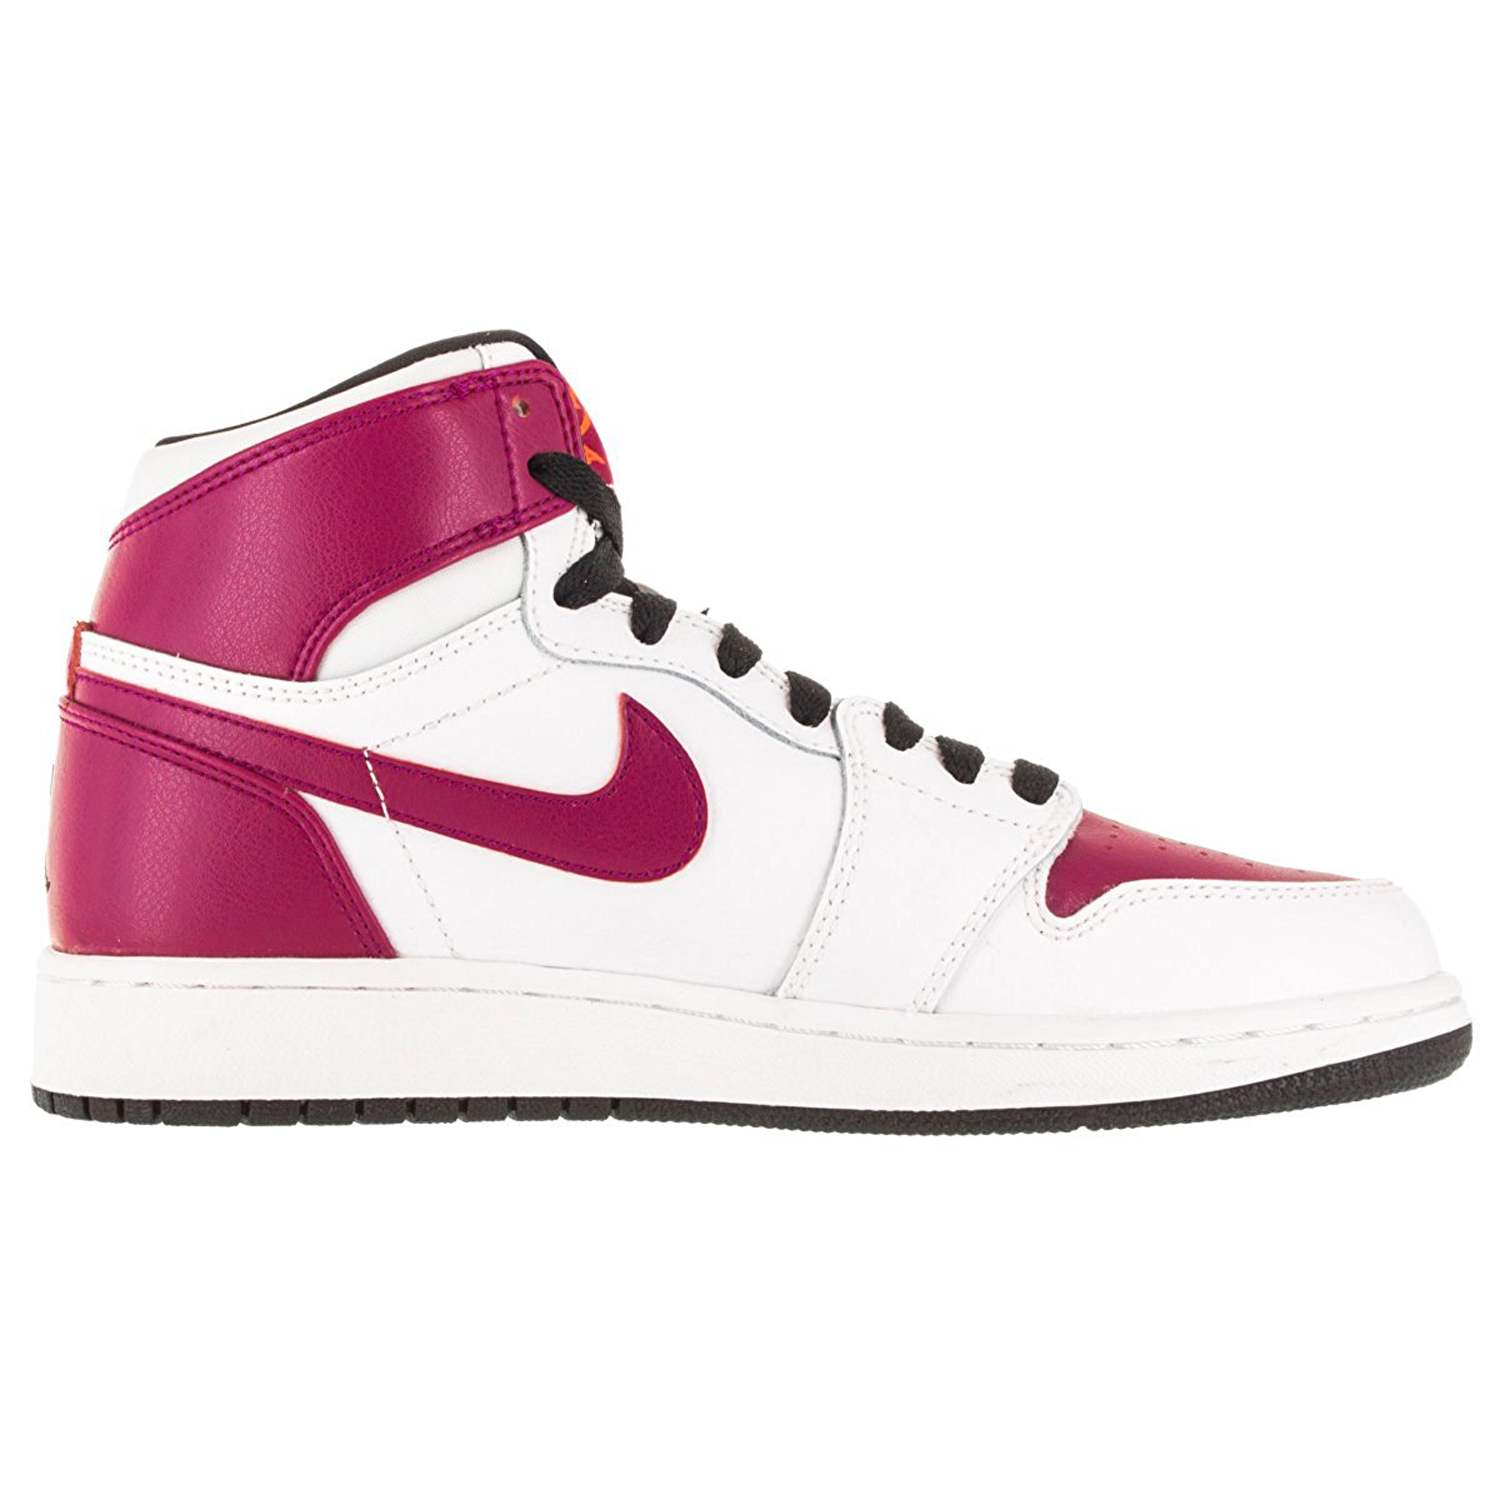 Air Jordan Big Kid Girls 1 Retro High GG Sneakers 332148 Sz 9.5Y White/Fuchsia - image 2 of 3